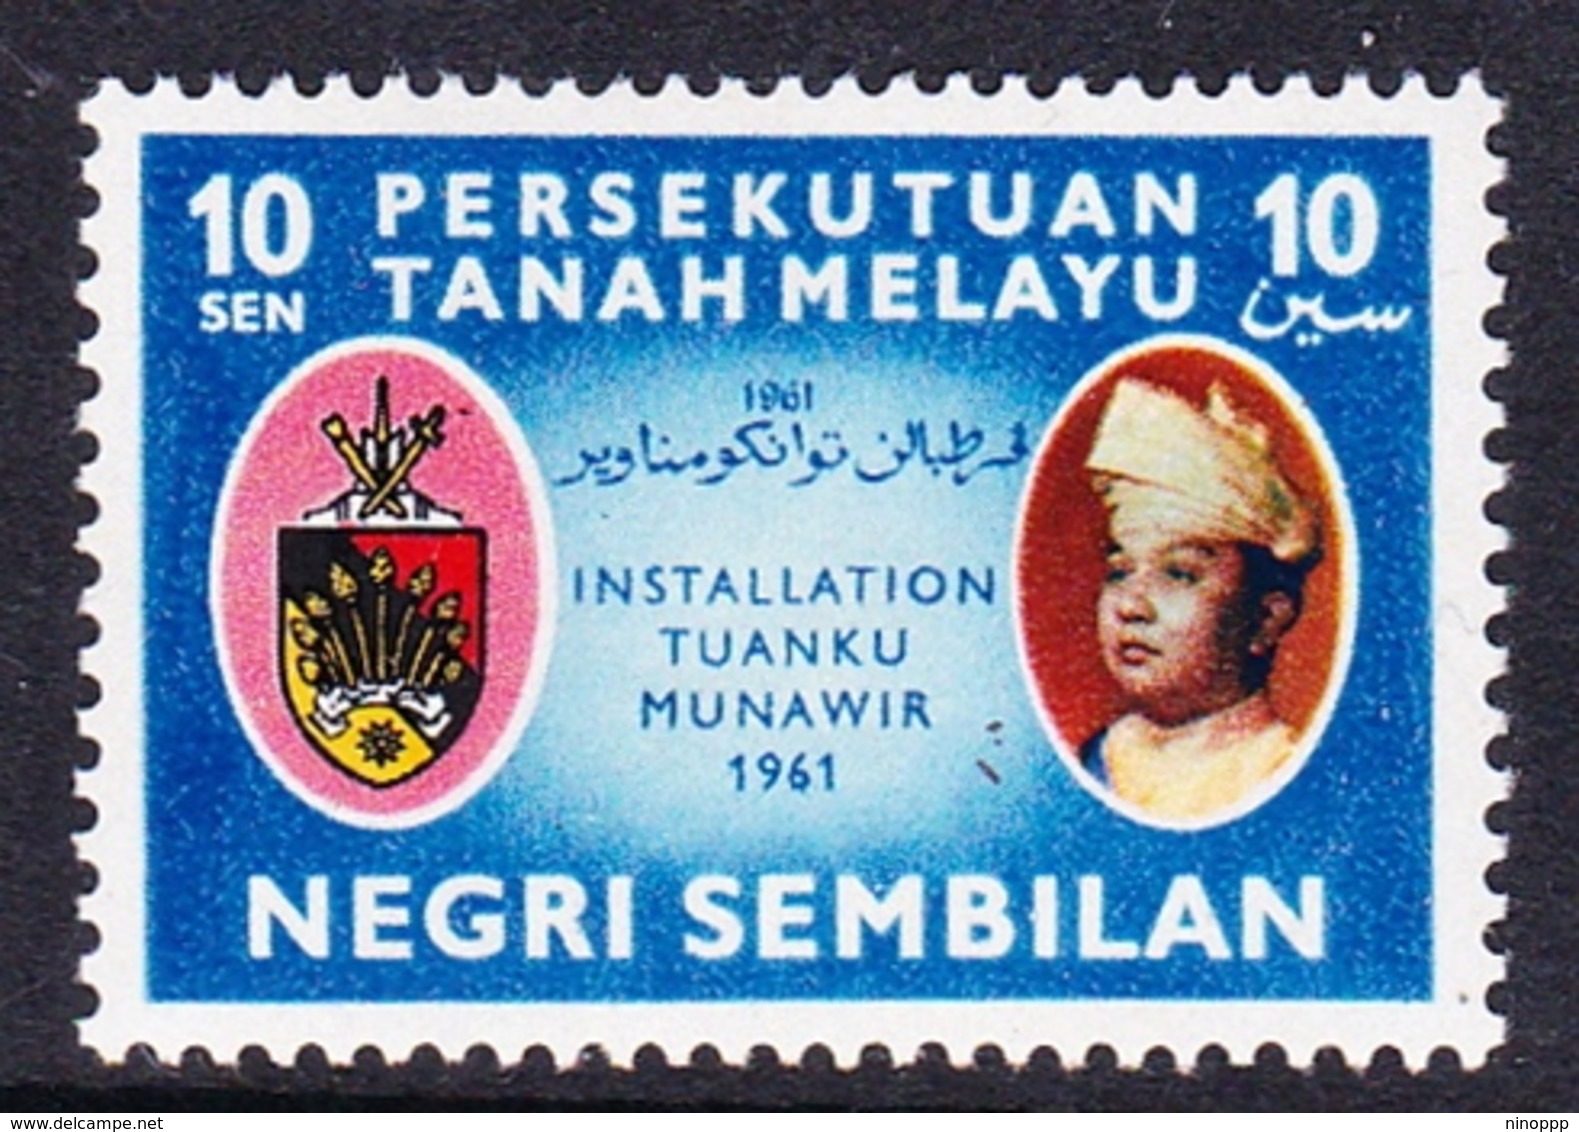 Malaysia-Negri Sembilan SG 80 1961 Installation Of Tuanku Munawir, Mint Hinged - Negri Sembilan